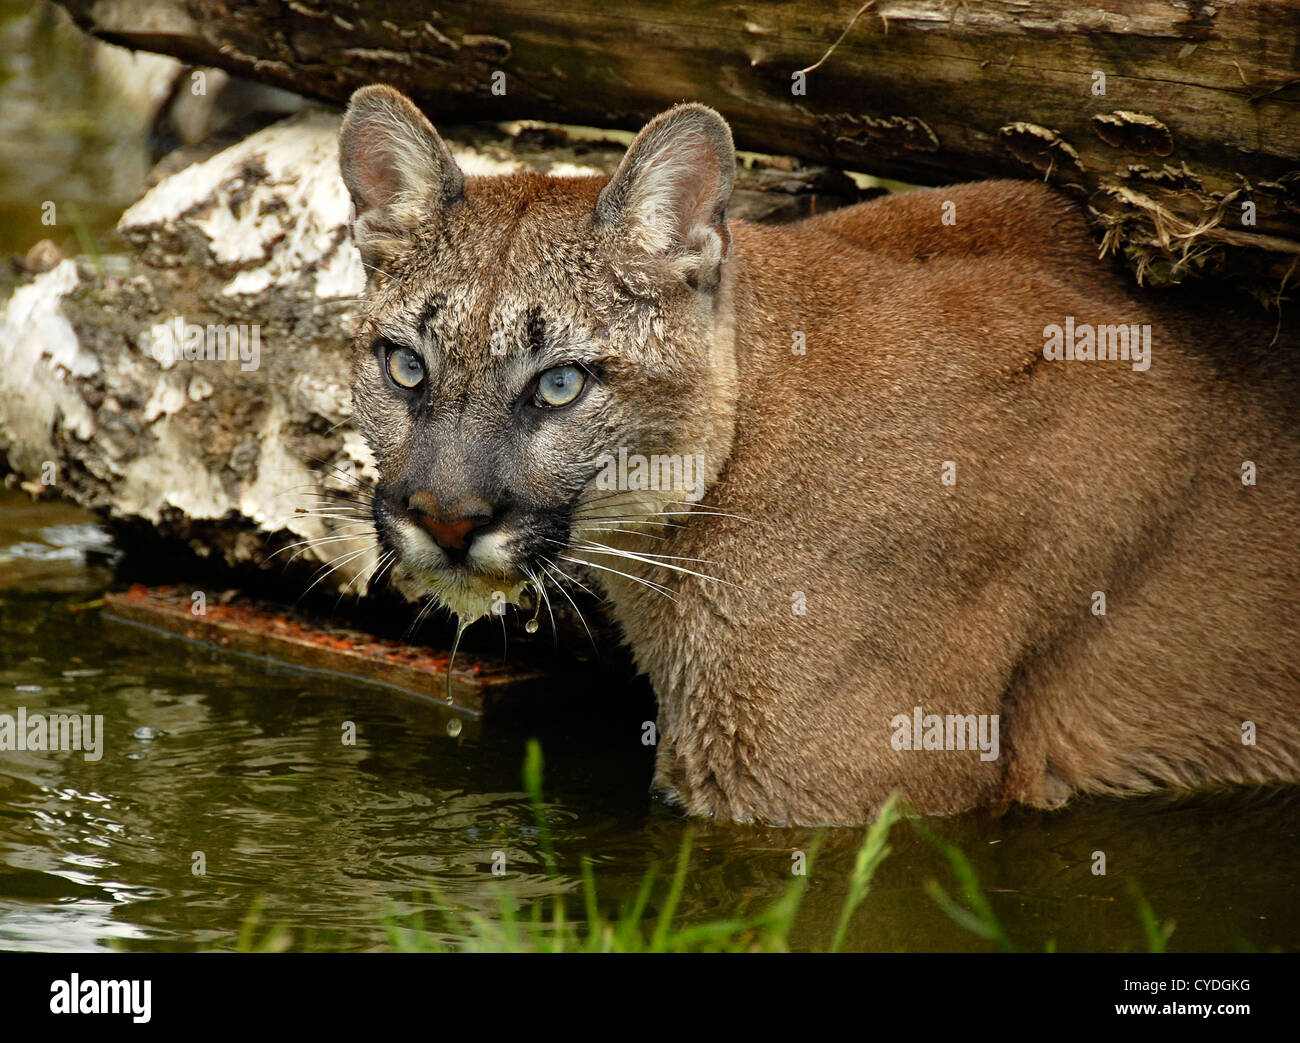 Puma Swimming beneath log Stock Photo 